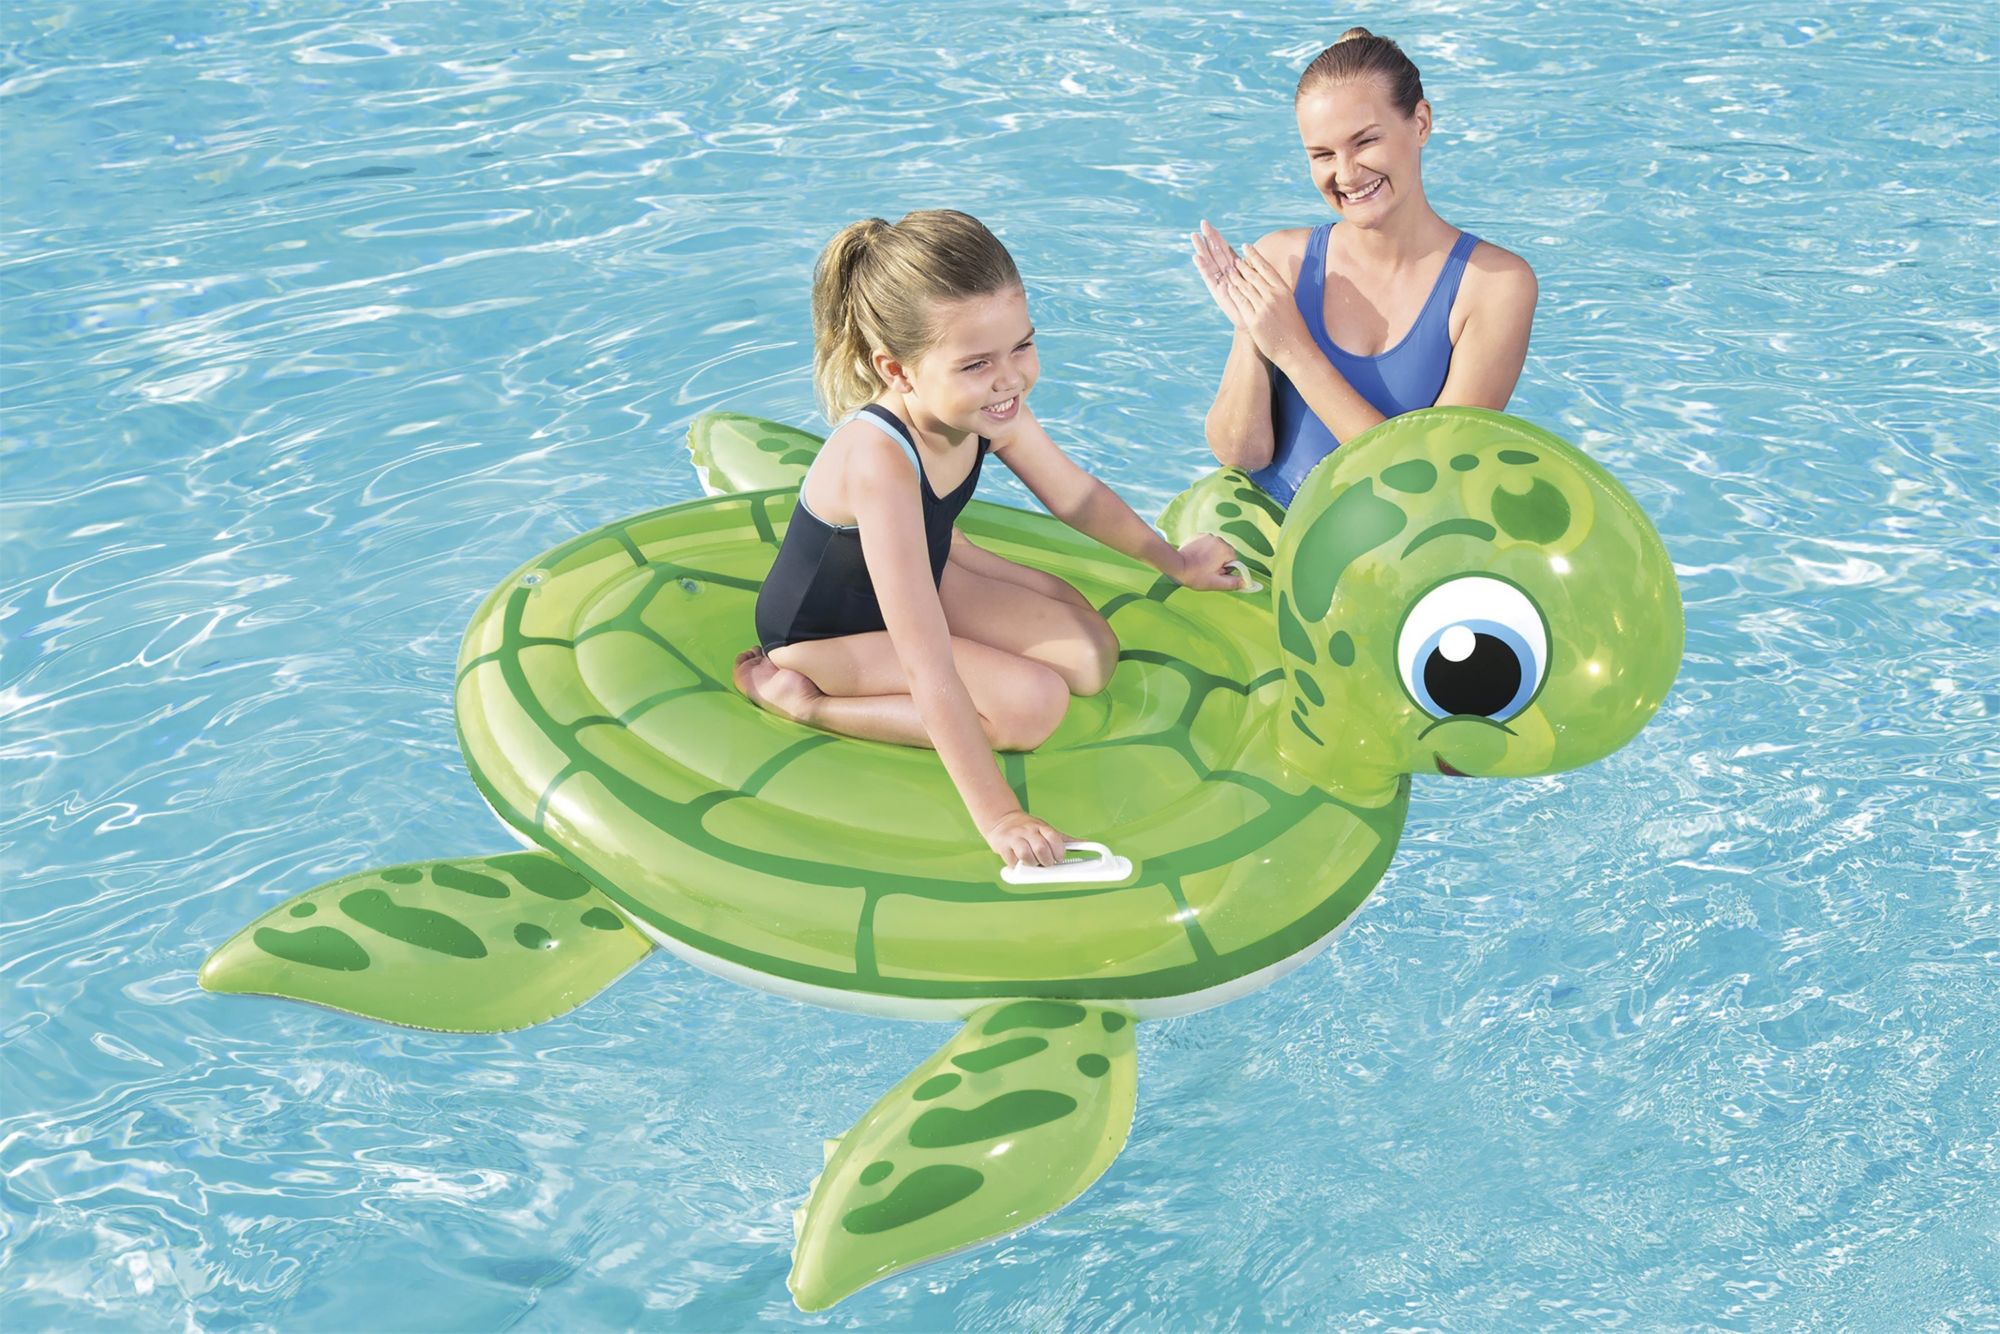 DBX Turtle Float